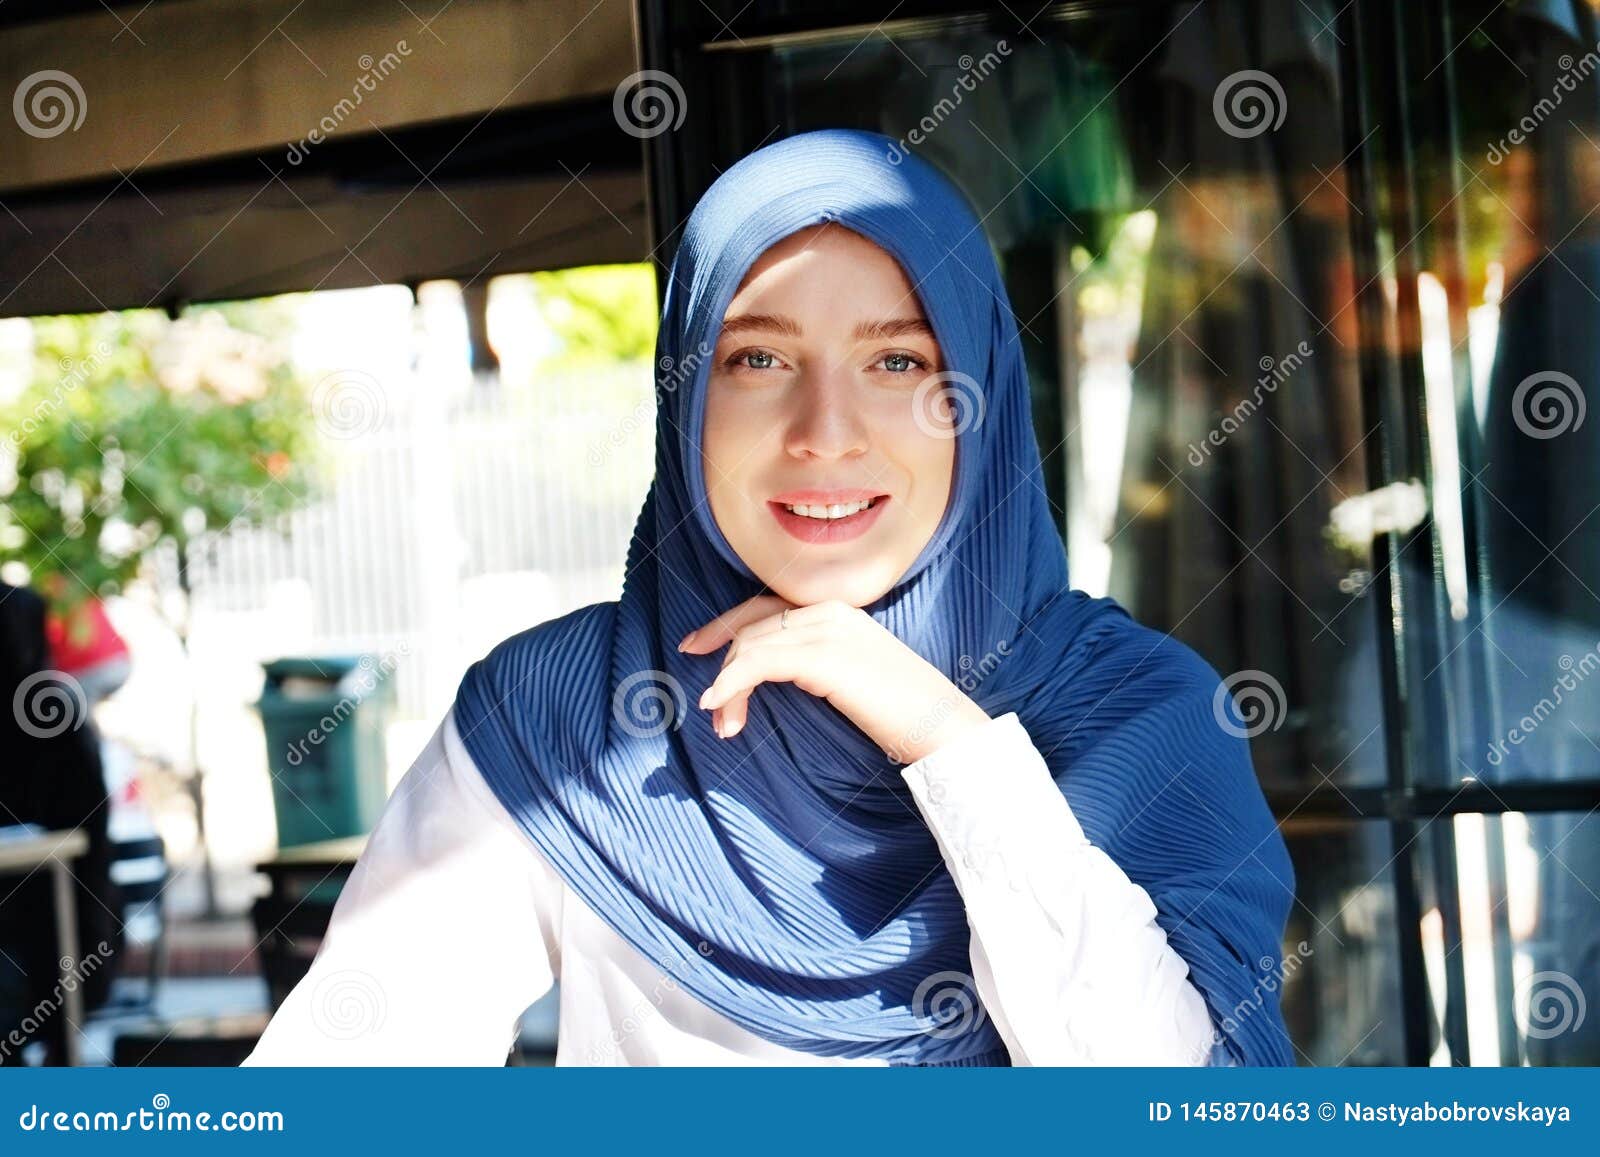 40+ Koleski Terbaik Hijab Wallpaper Hipster Girl Muslimah ...